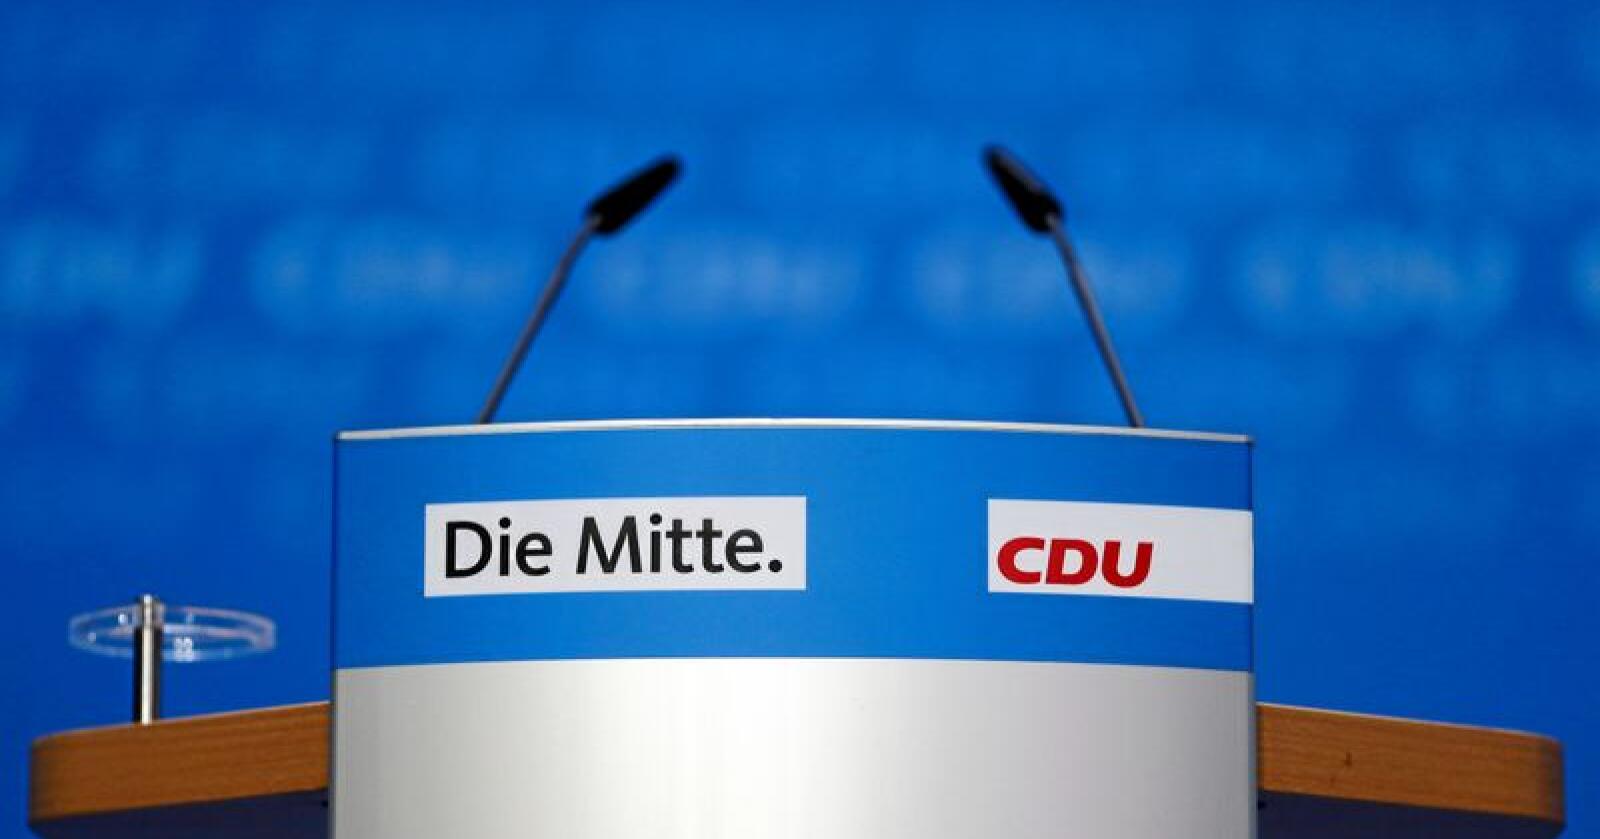 Slagordet "Sentrum" og partinavnet "CDU" står skrevet på Angela Merkels talerstol under en pressekonferanse i Berlin 29. oktober. Foto:  Markus Schreiber / AP / NTB Scanpix